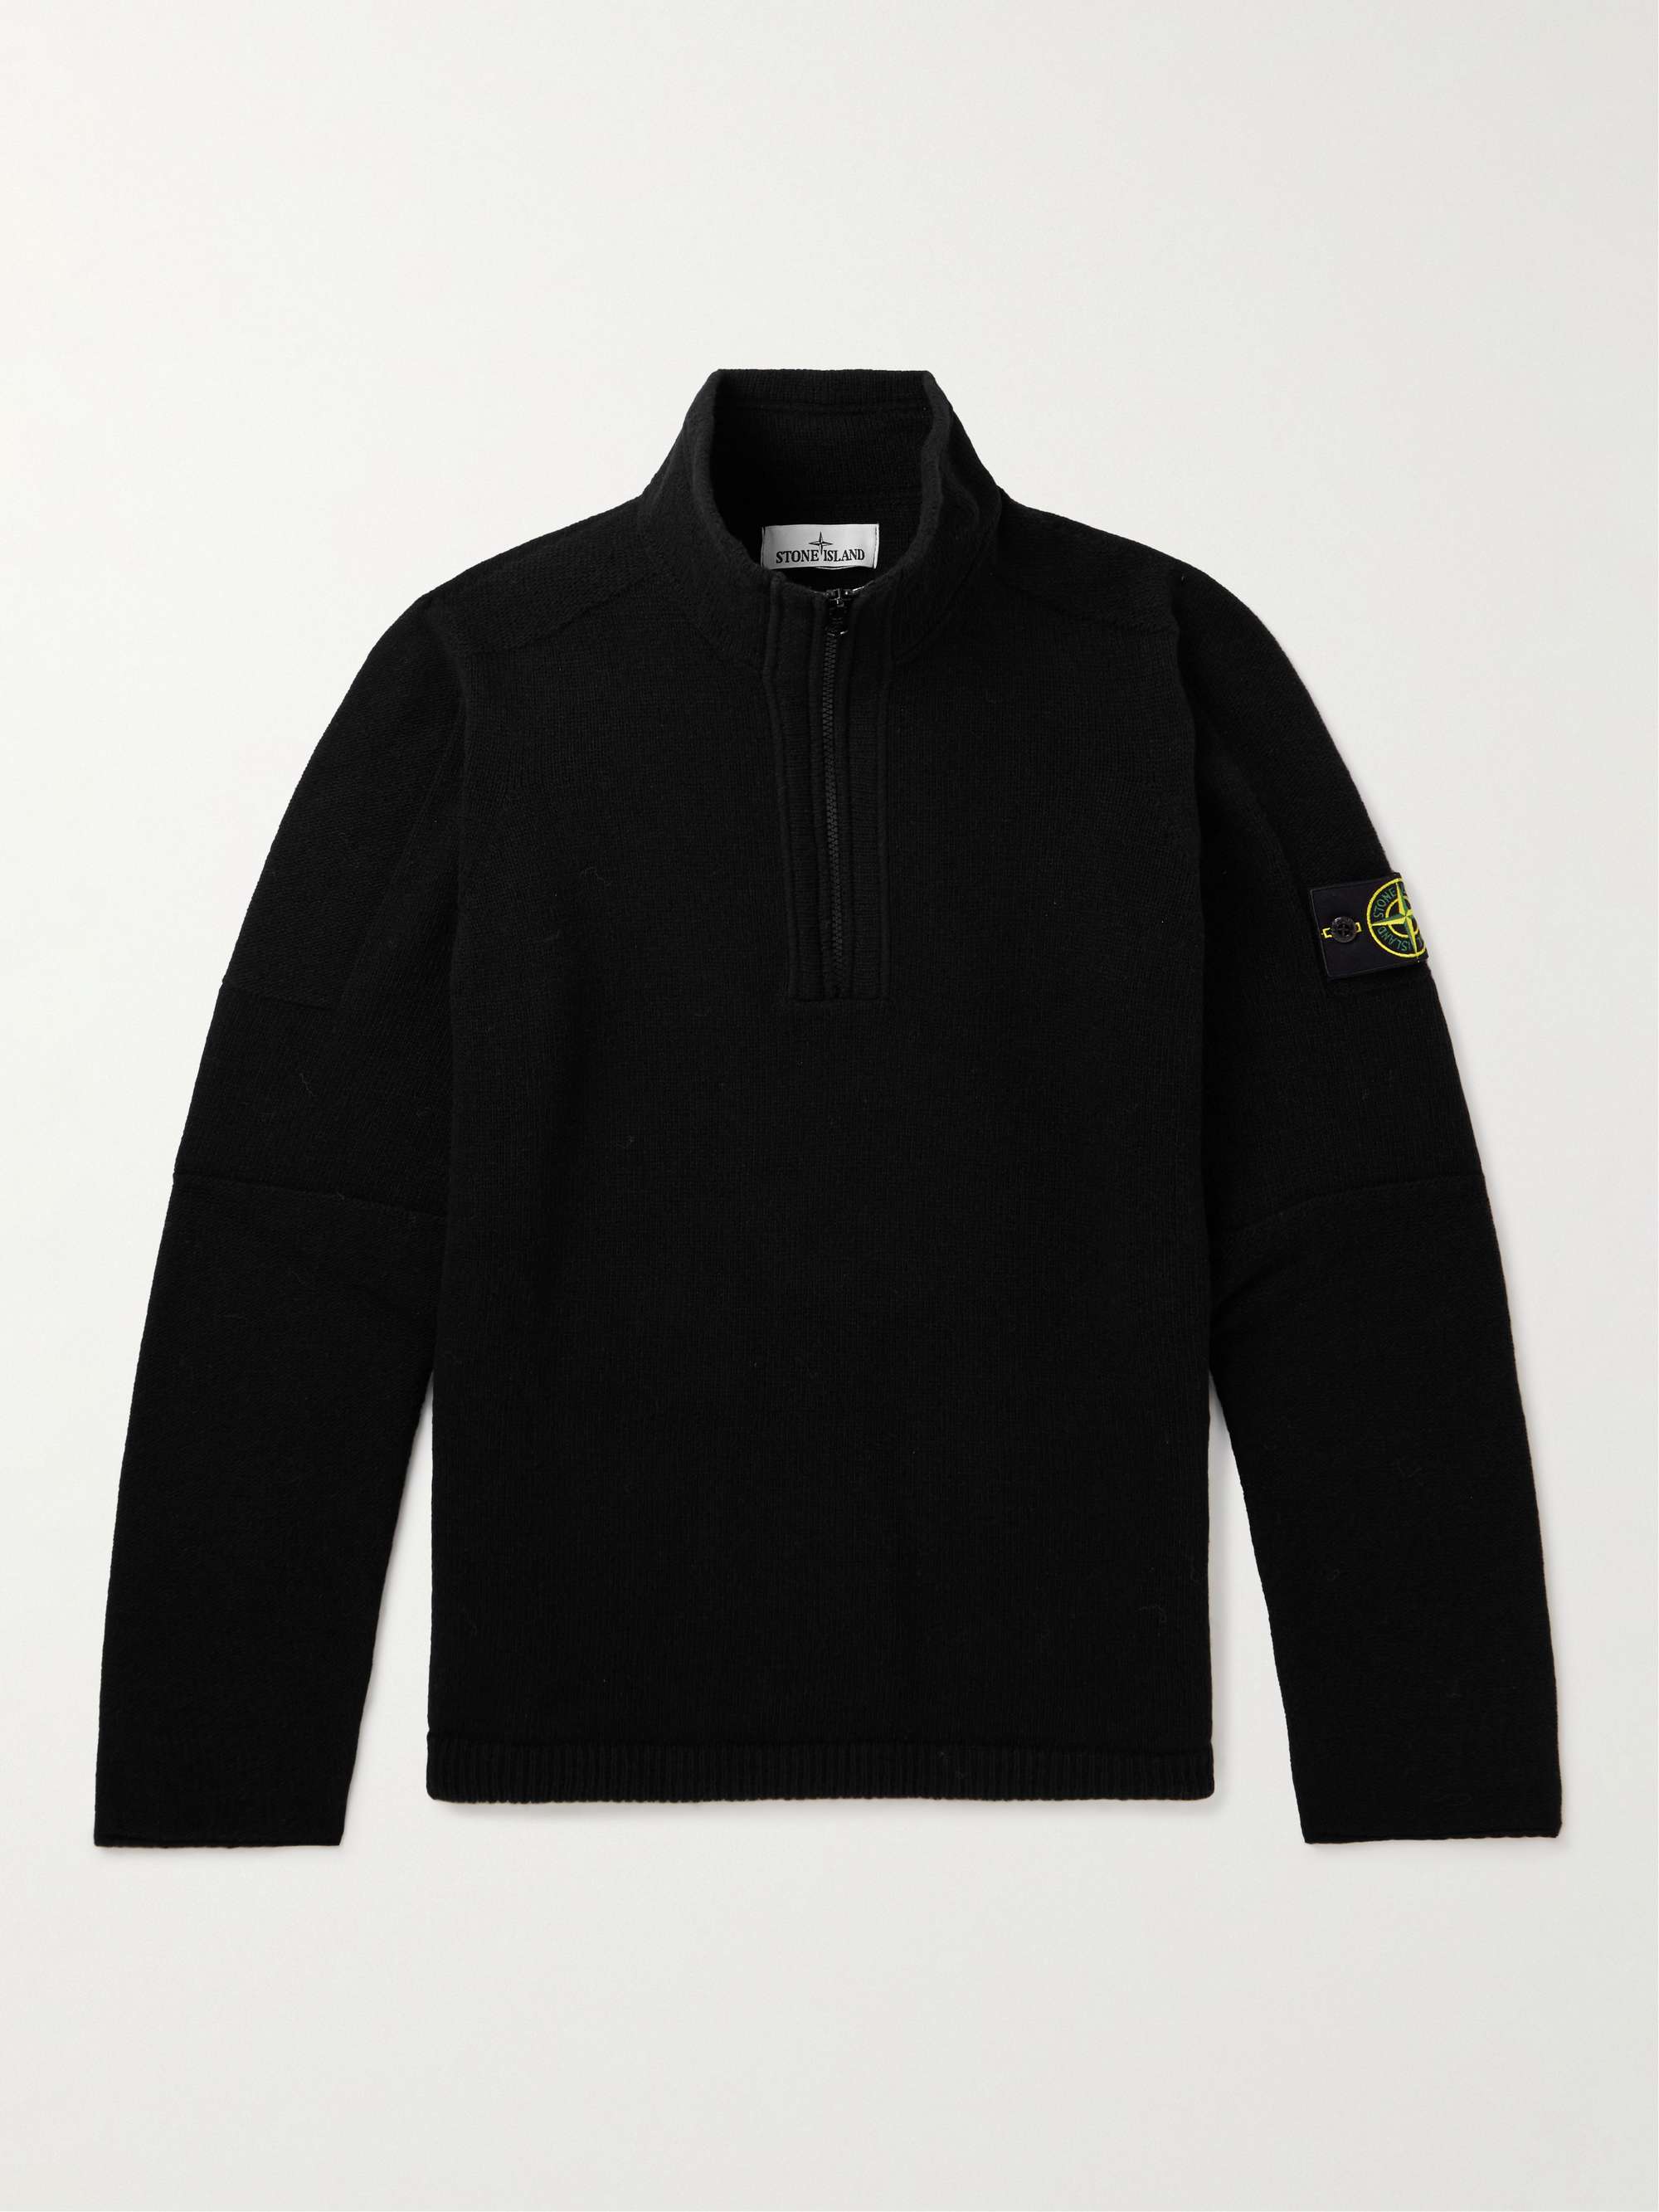 STONE ISLAND Logo-Appliqued Wool-Blend Half-Zip Sweater,Black